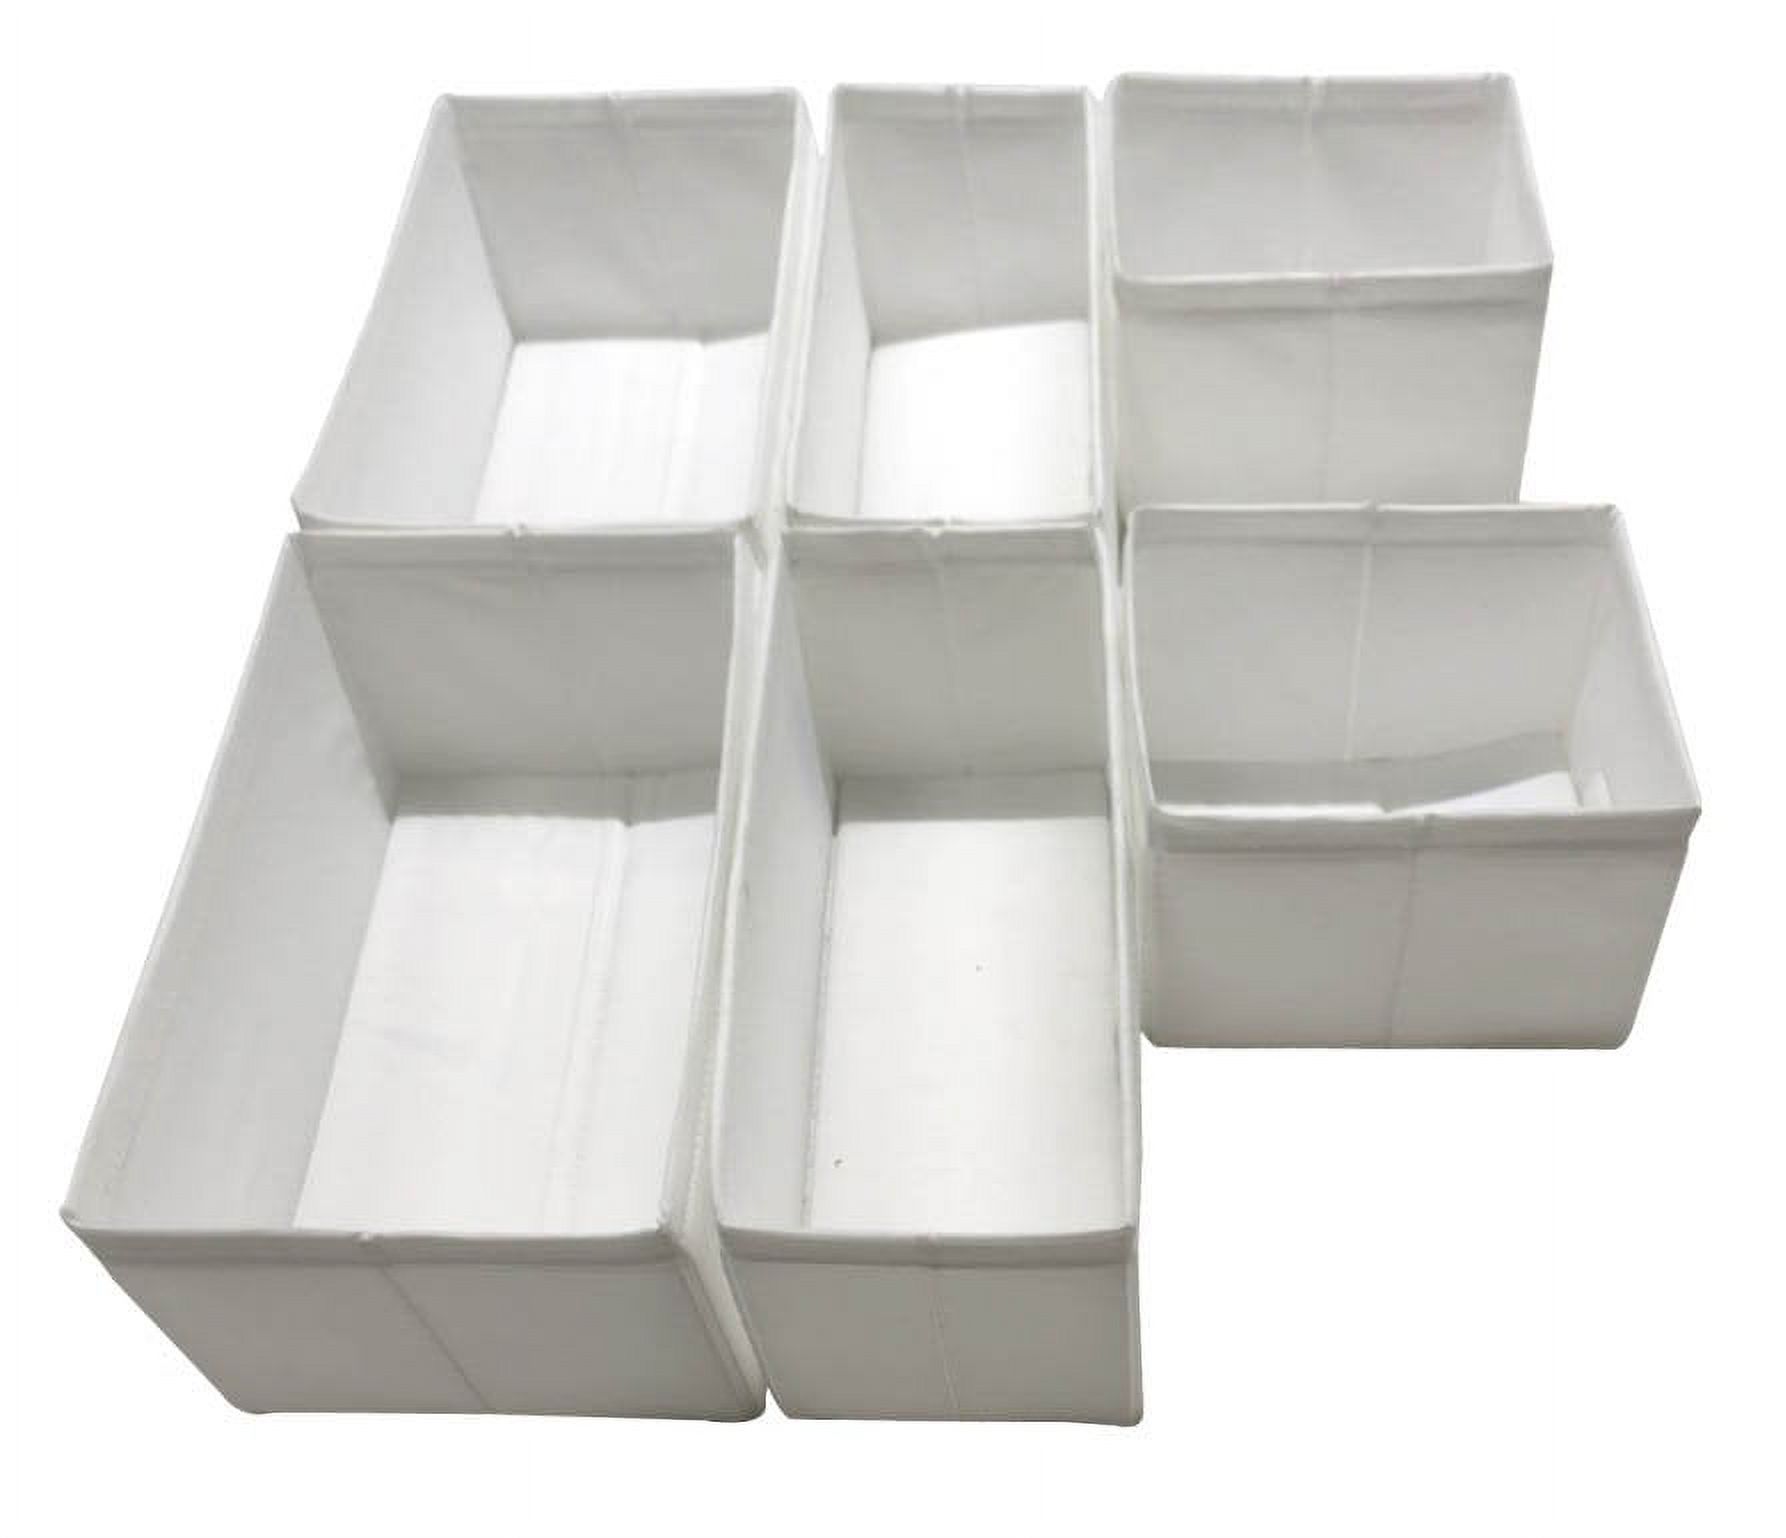 Mainstays White Fabric Drawer Organizer Set, 6 Total Bins, 3 Sizes - image 4 of 5